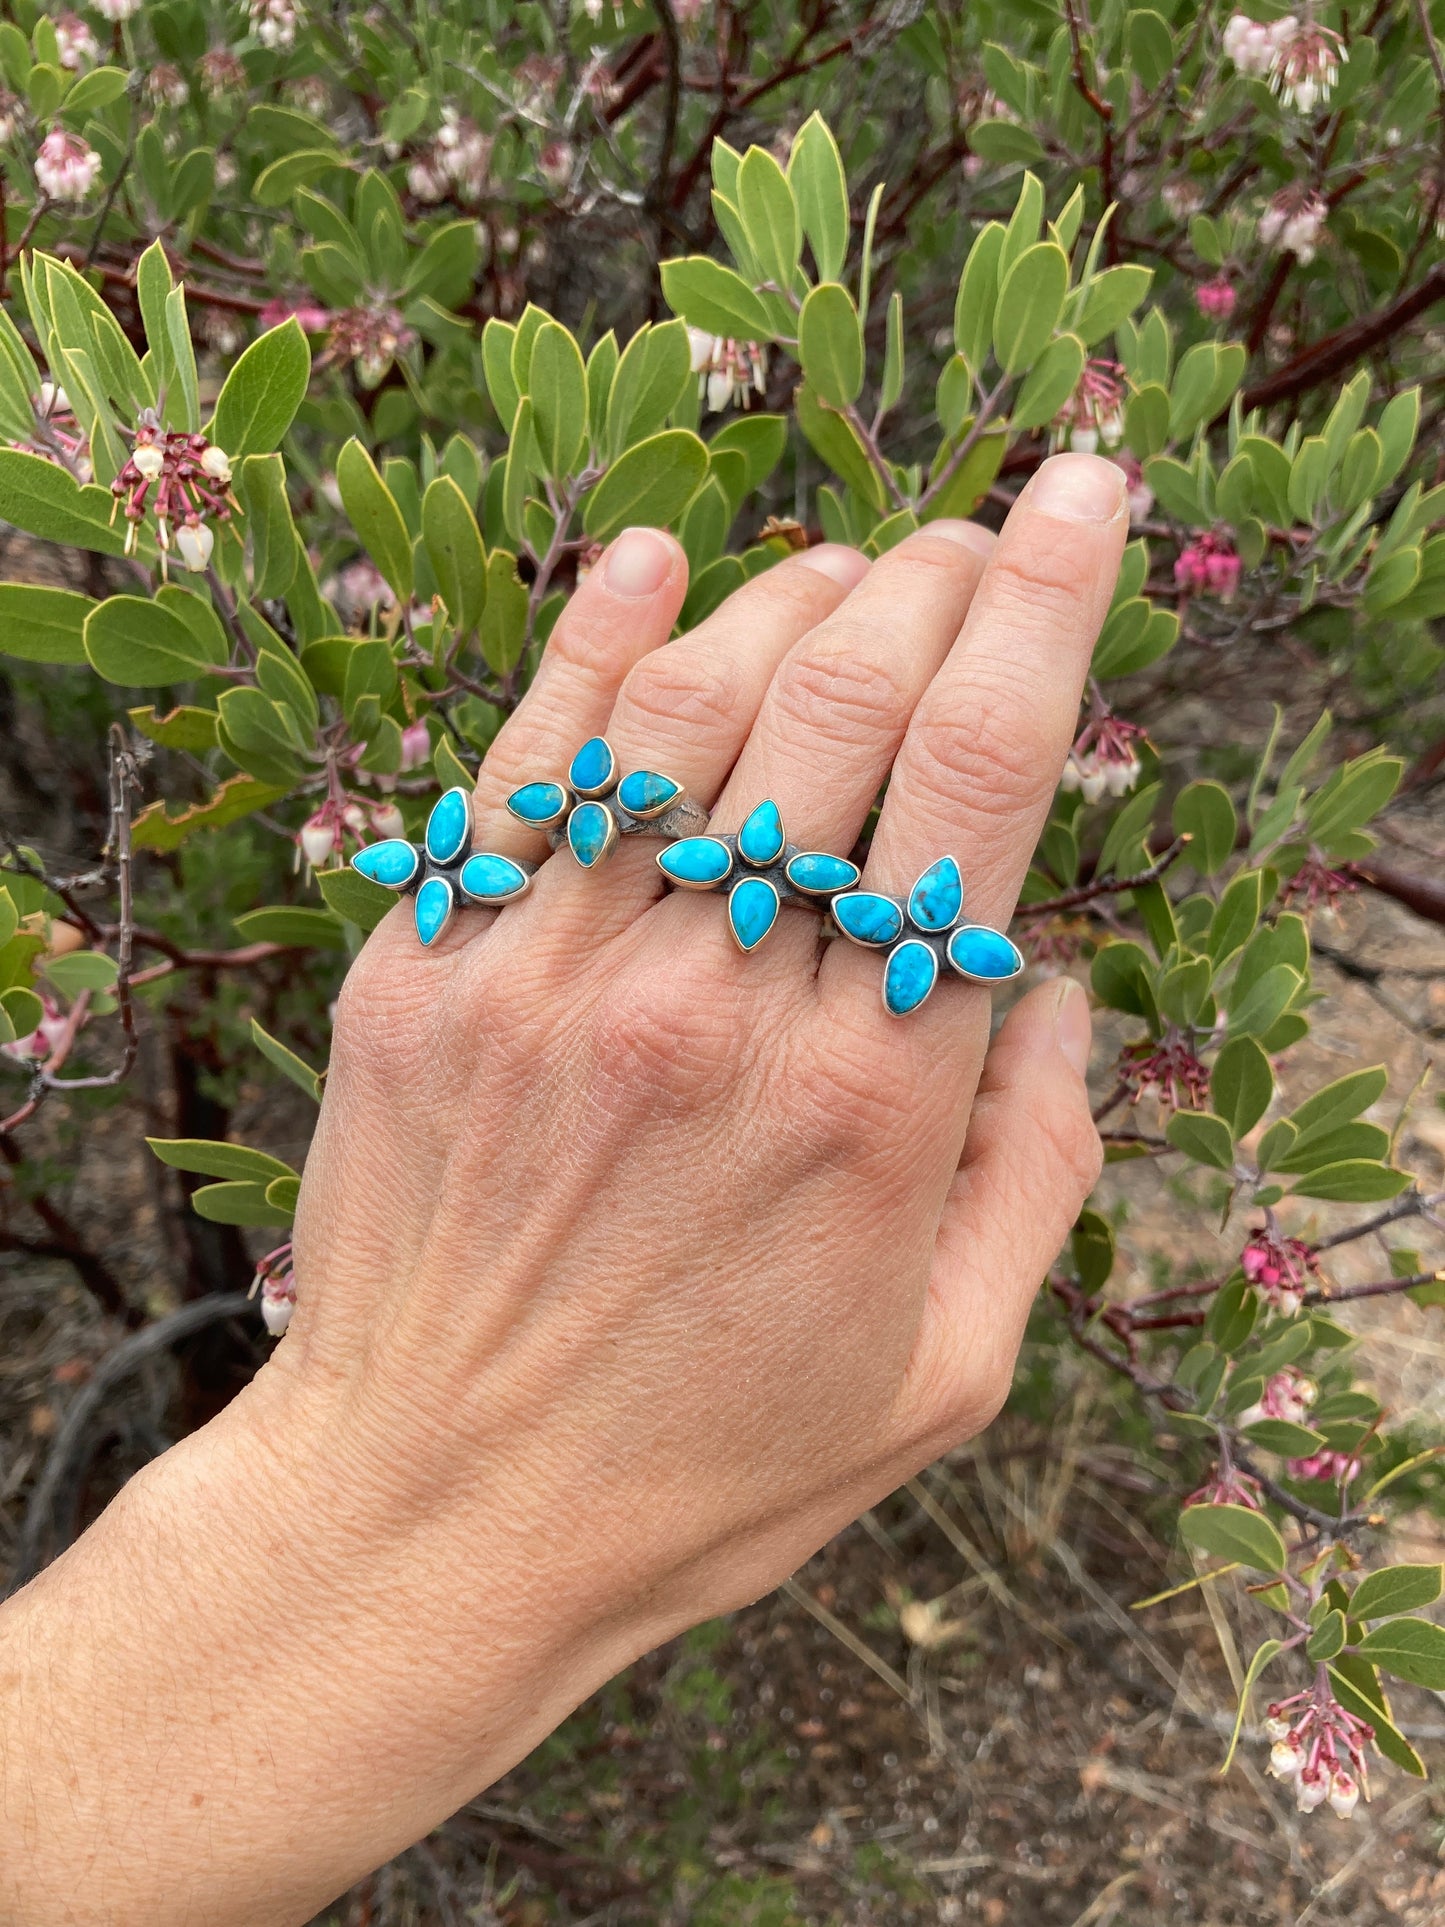 sandcast flower burst ring with blue ridge turquoise and 14k GOLD bezels - size 7 - Lumenrose